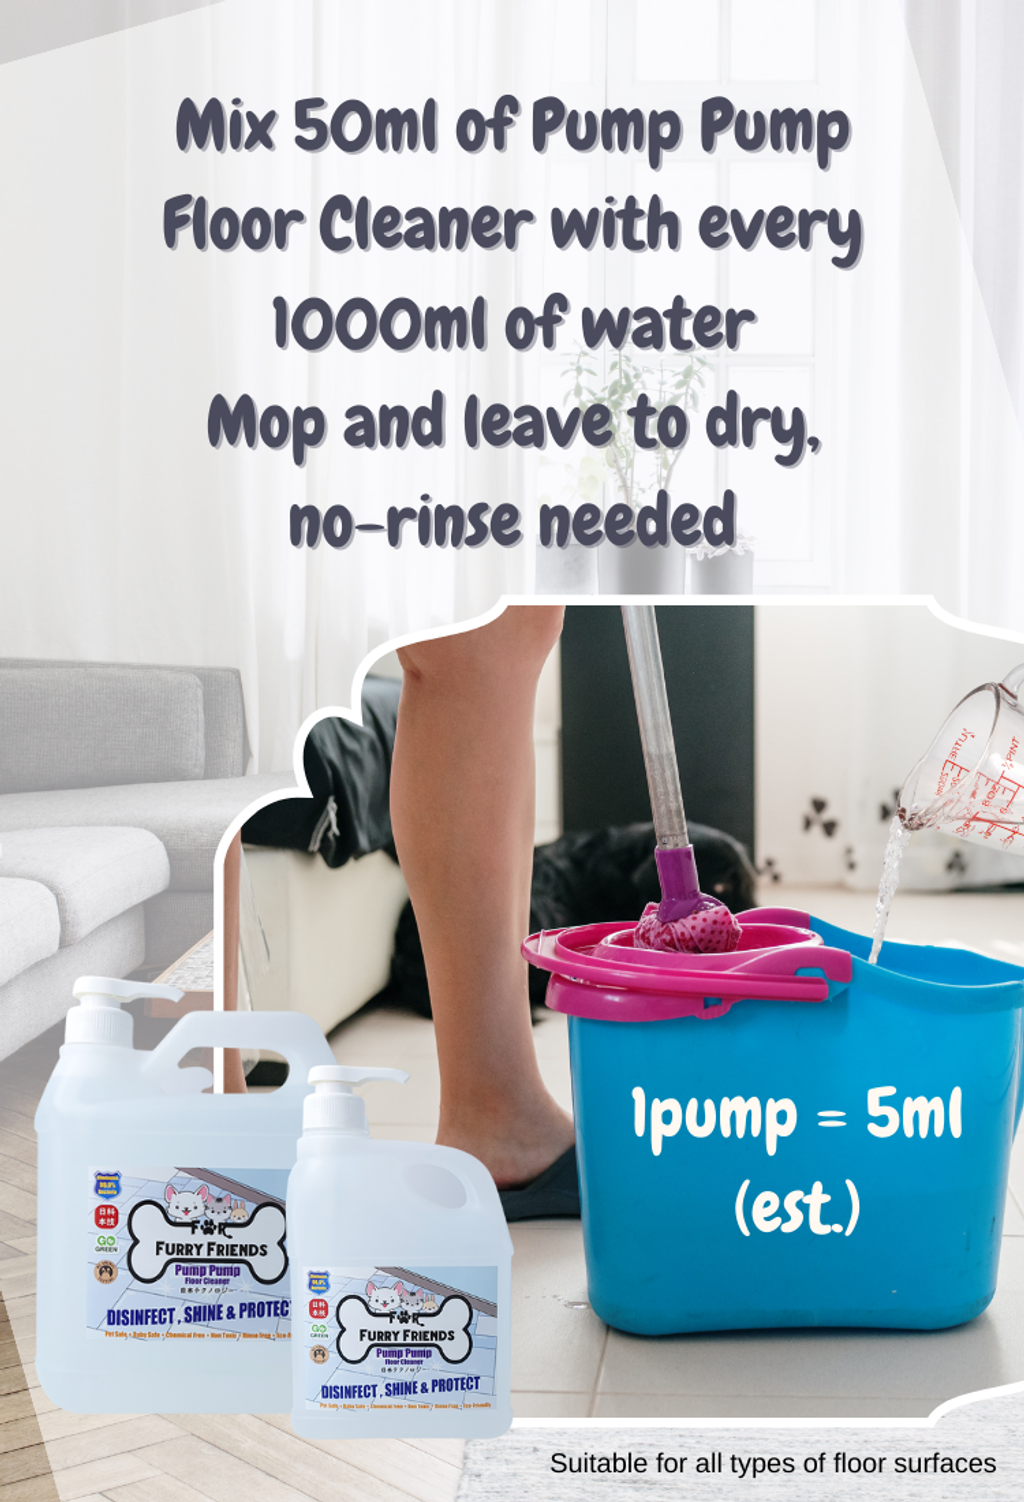 Pump Pump Floor Cleaner Ads_3.png